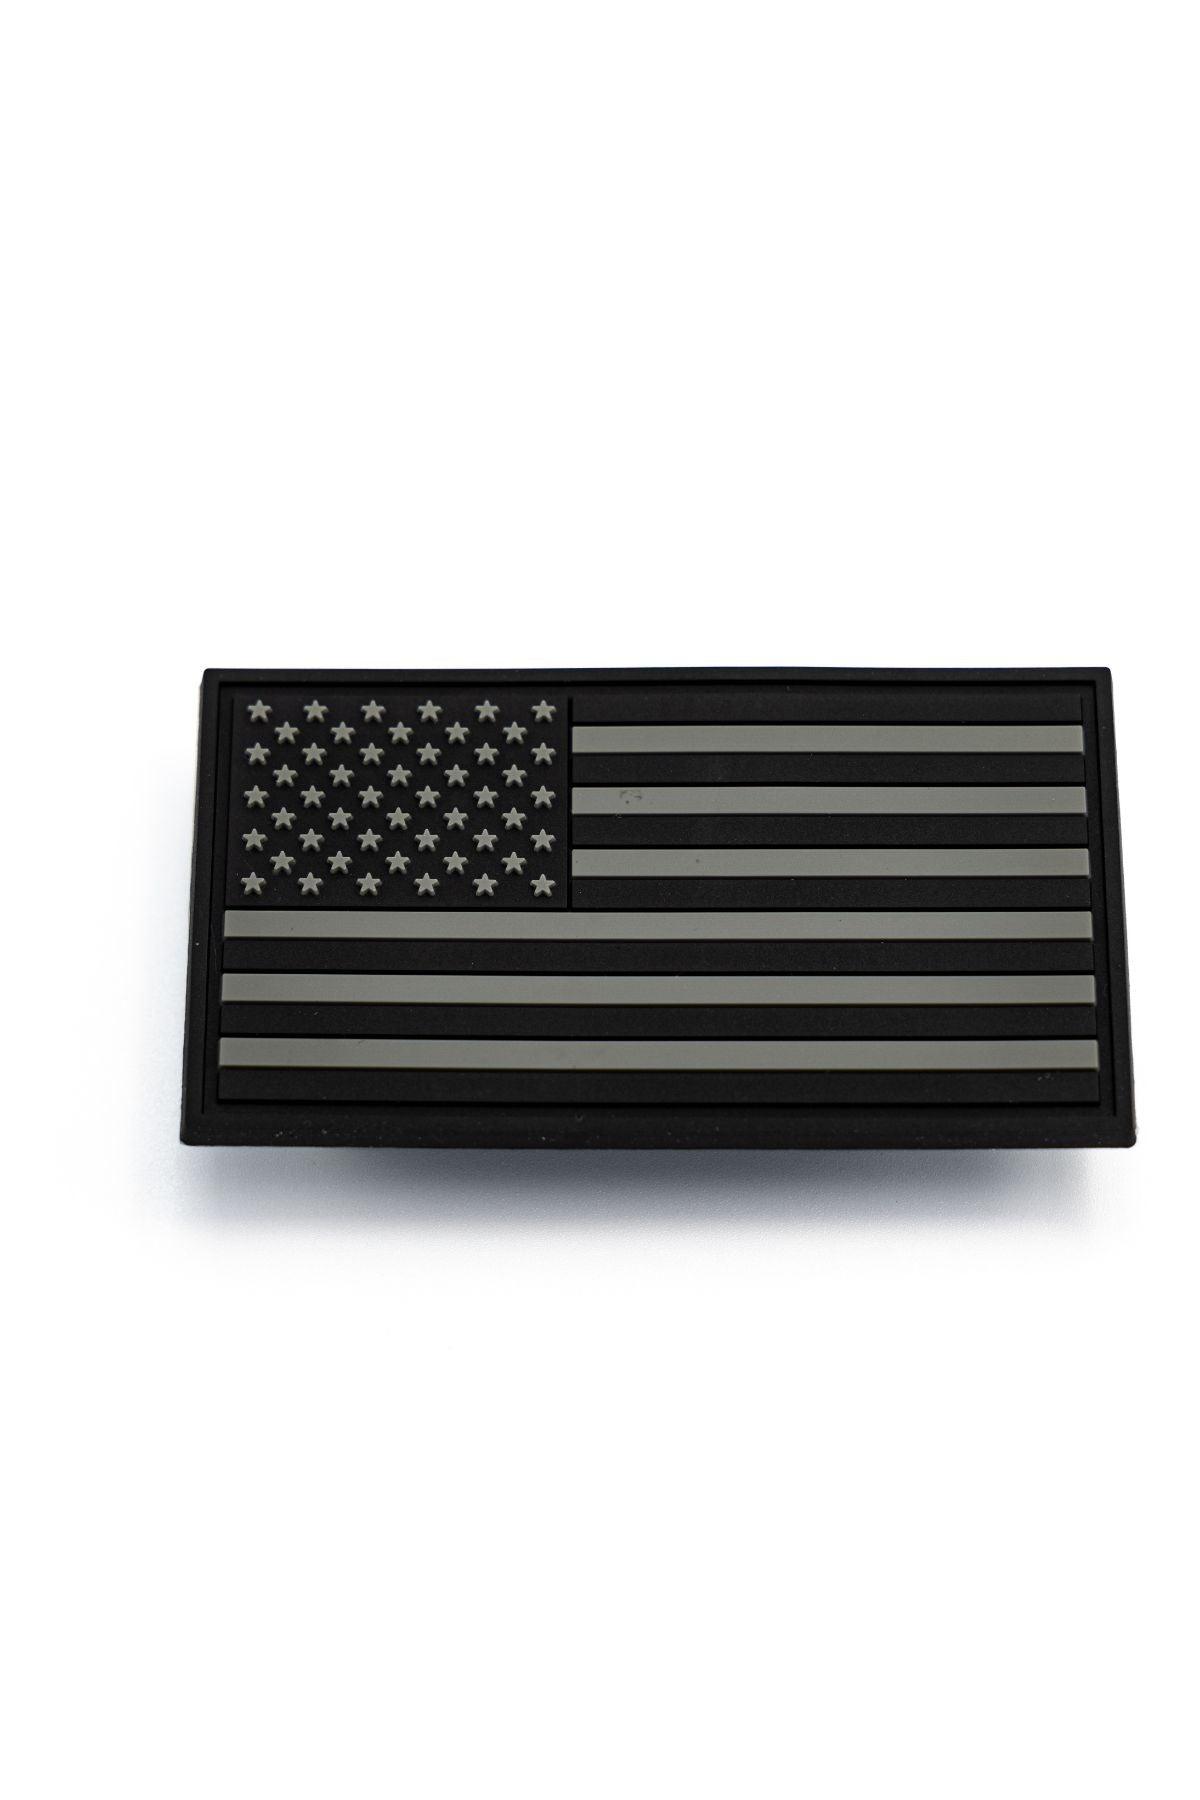 USA FLAG GRAY AND BLACK PVC PATCH - Cowboy Snapback